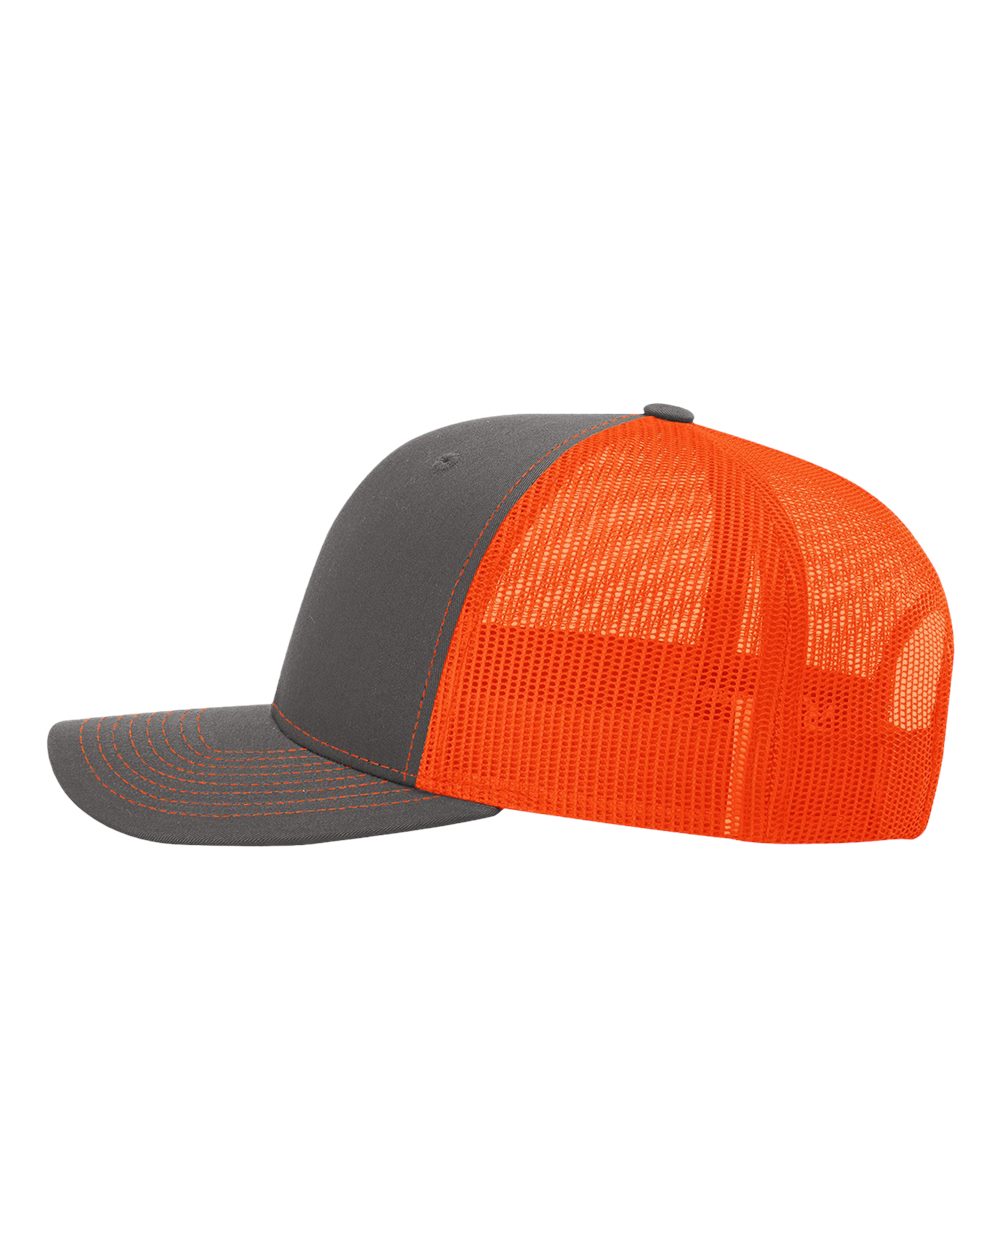 Richardson Adjustable Customized Snapback Trucker Caps, Charcoal Neon Orange